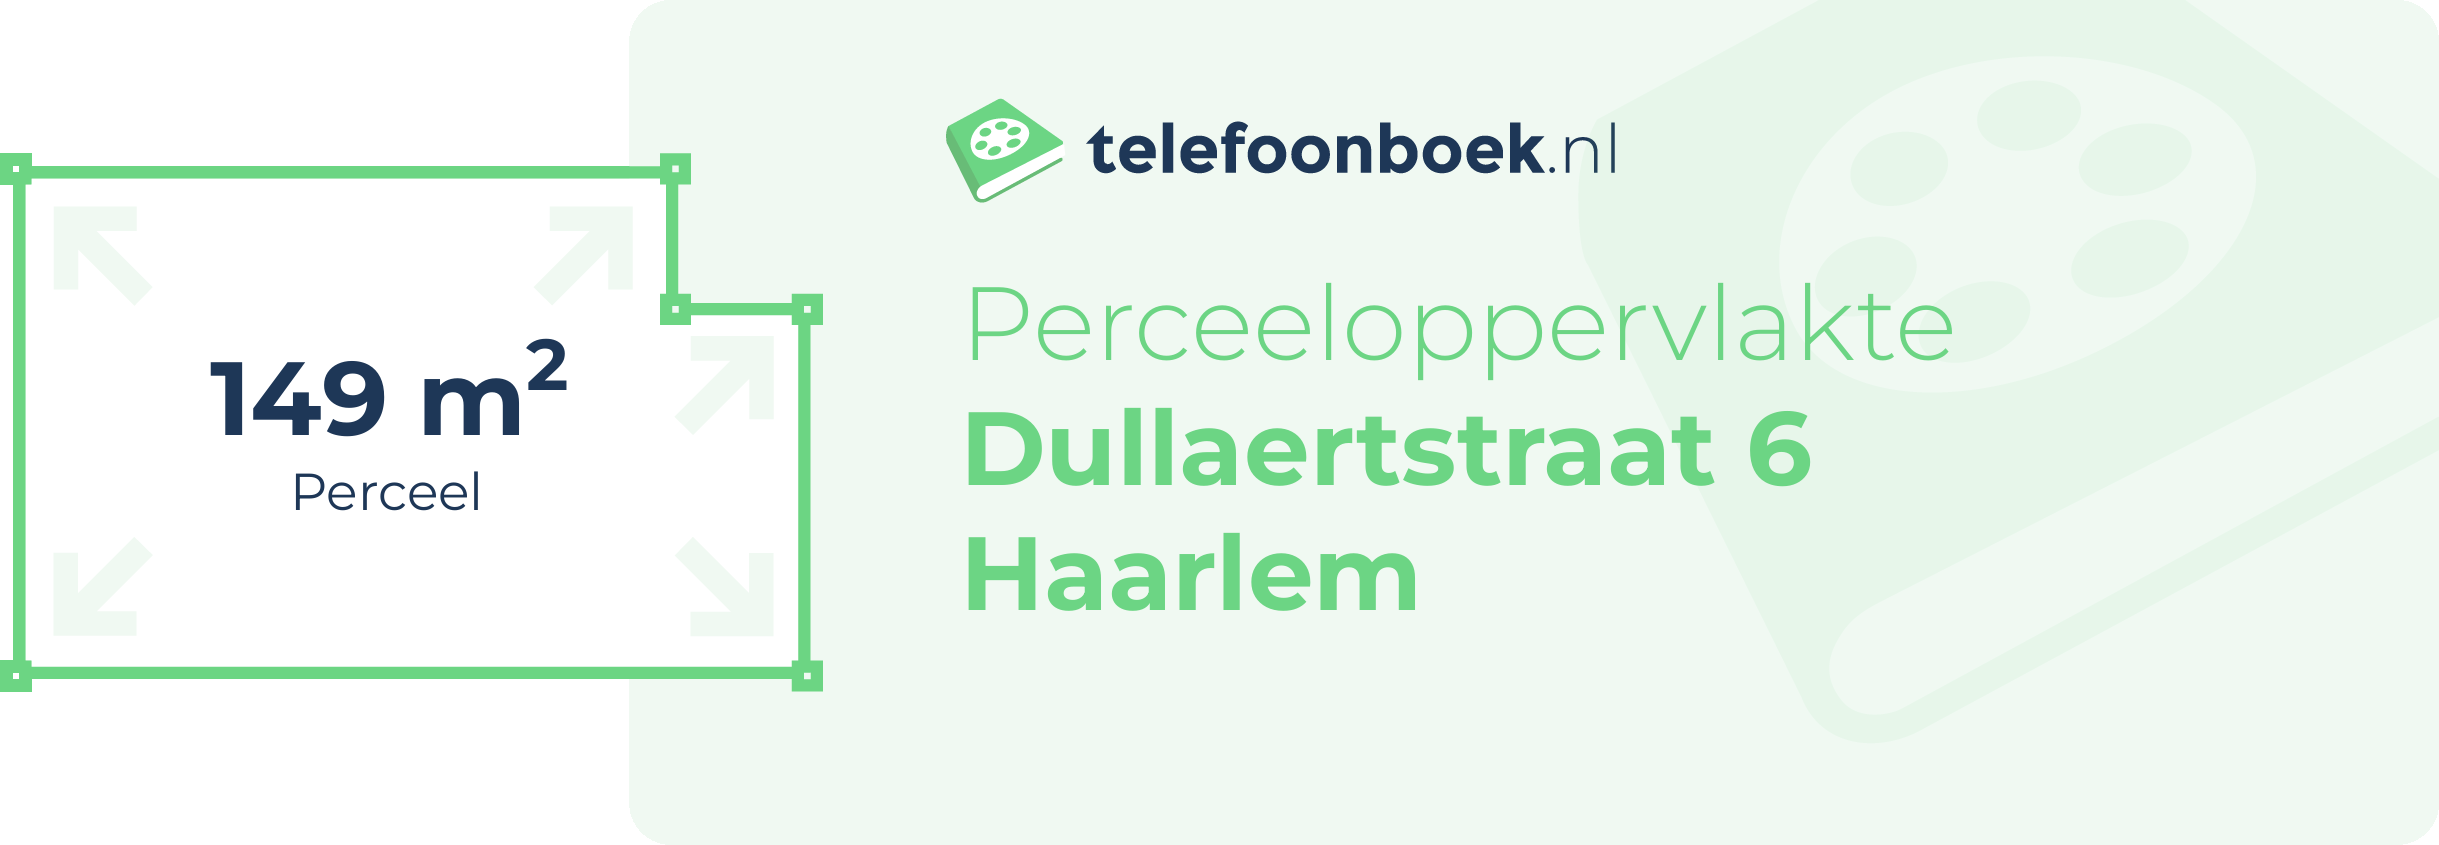 Perceeloppervlakte Dullaertstraat 6 Haarlem